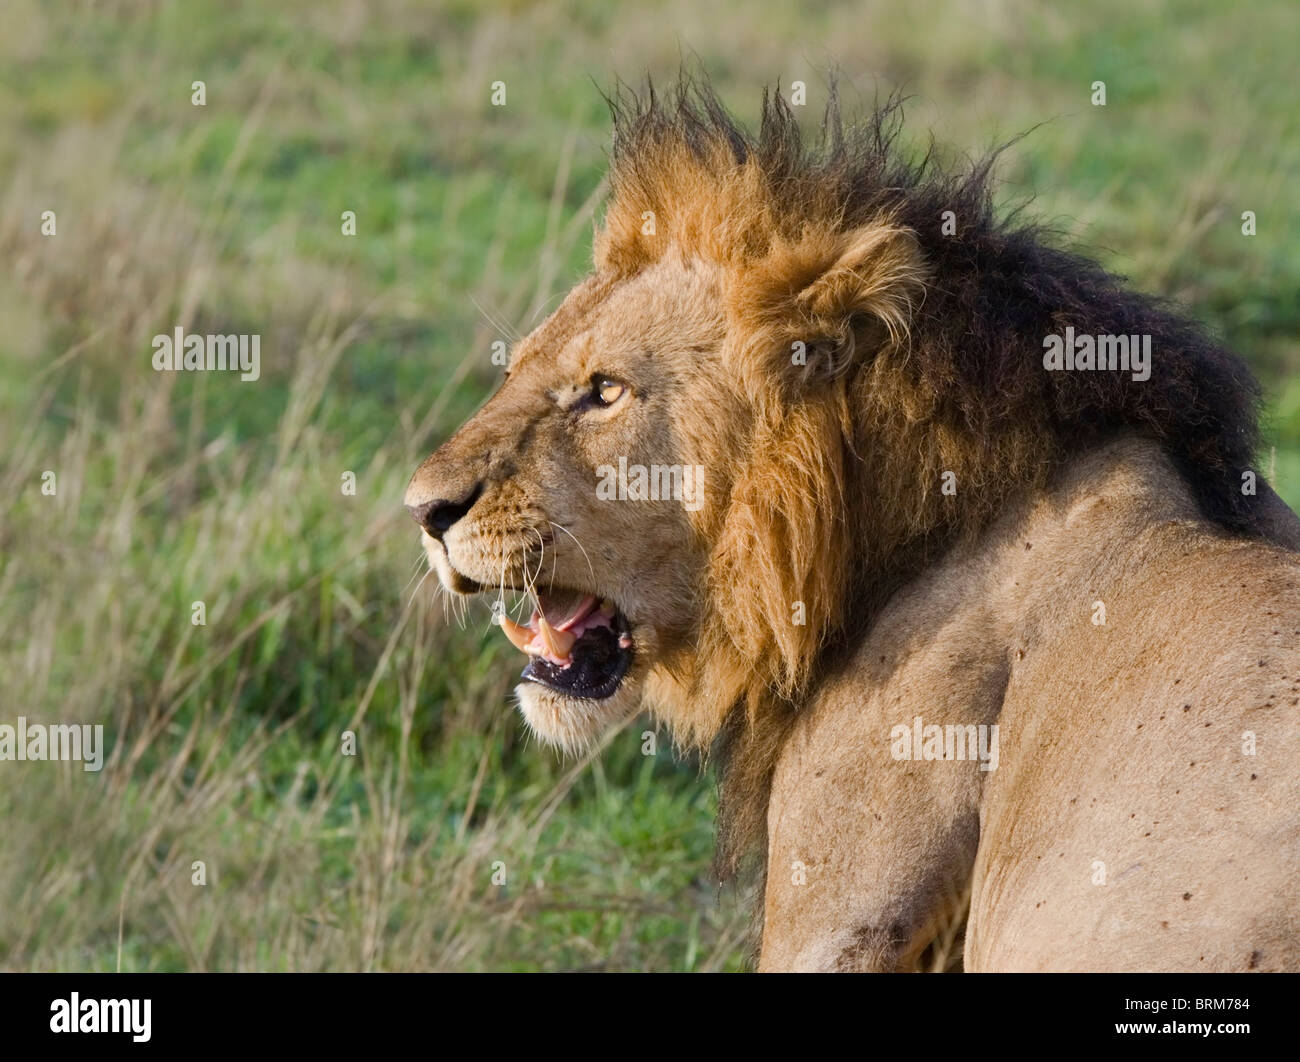 Lion baring its teeth Stock Photo